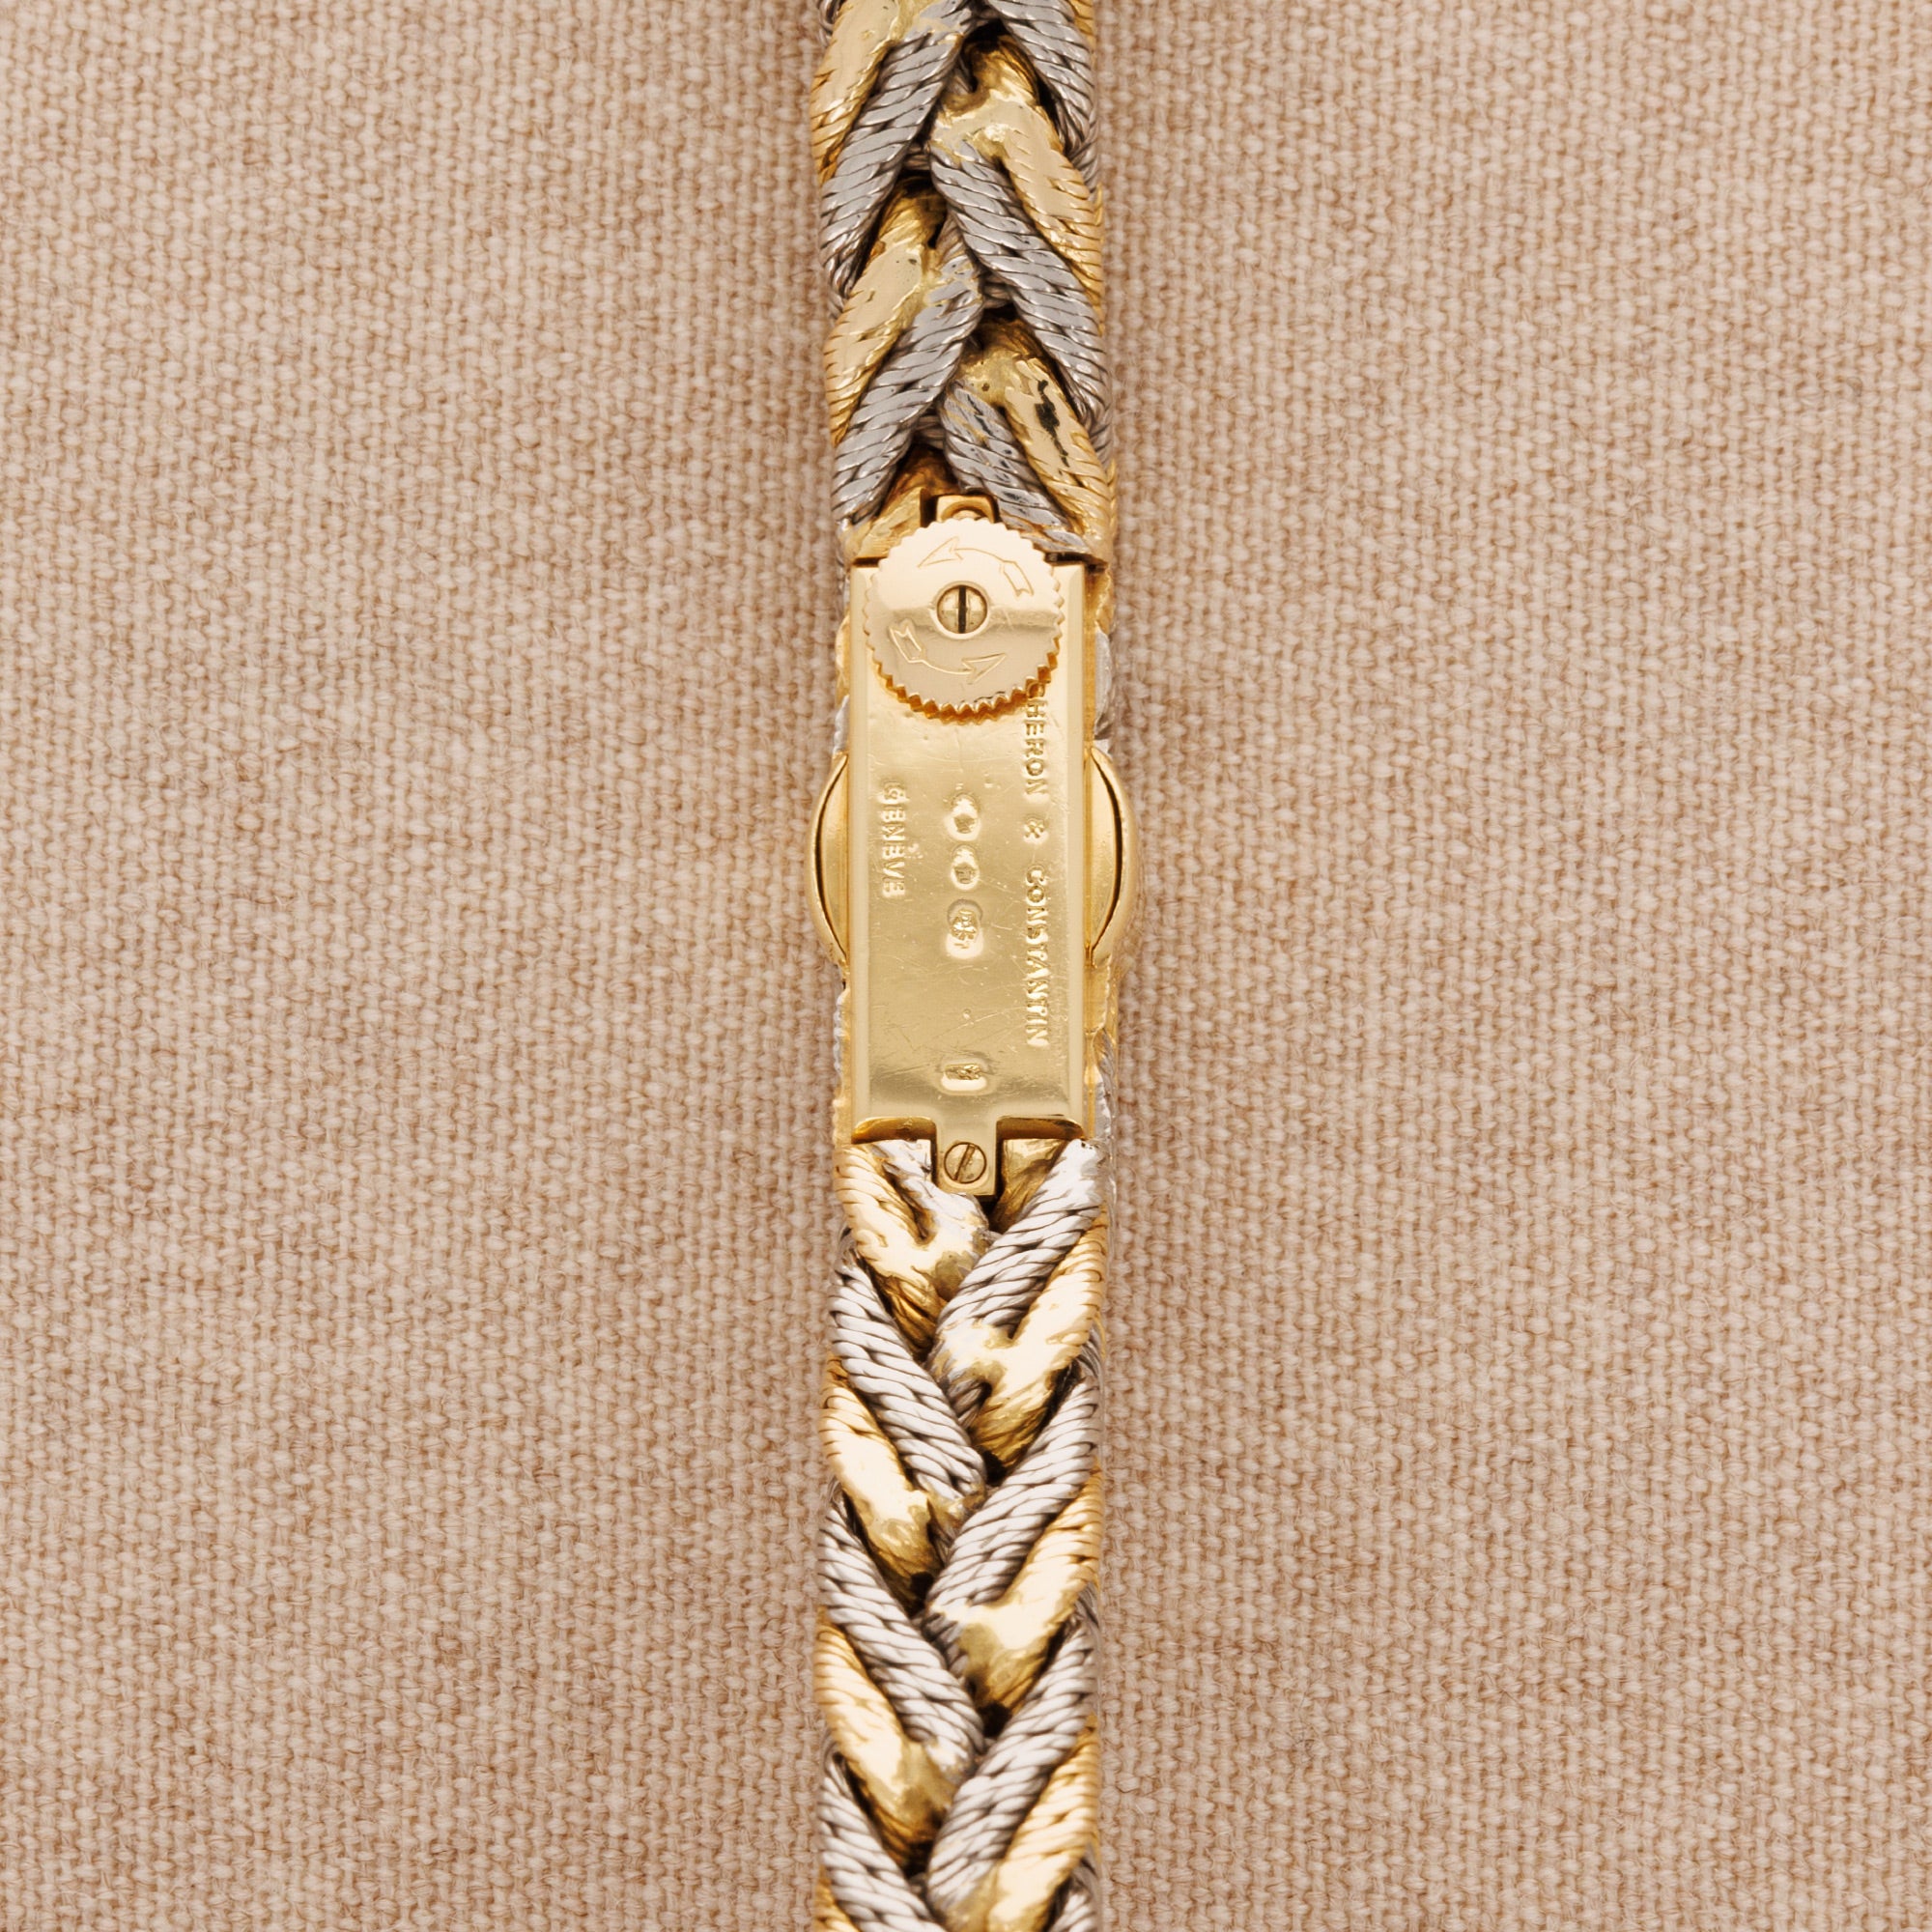 Vacheron Constantin - Vacheron Constantin Platinum &amp; Gold Diamond Watch by George Lenfant - The Keystone Watches